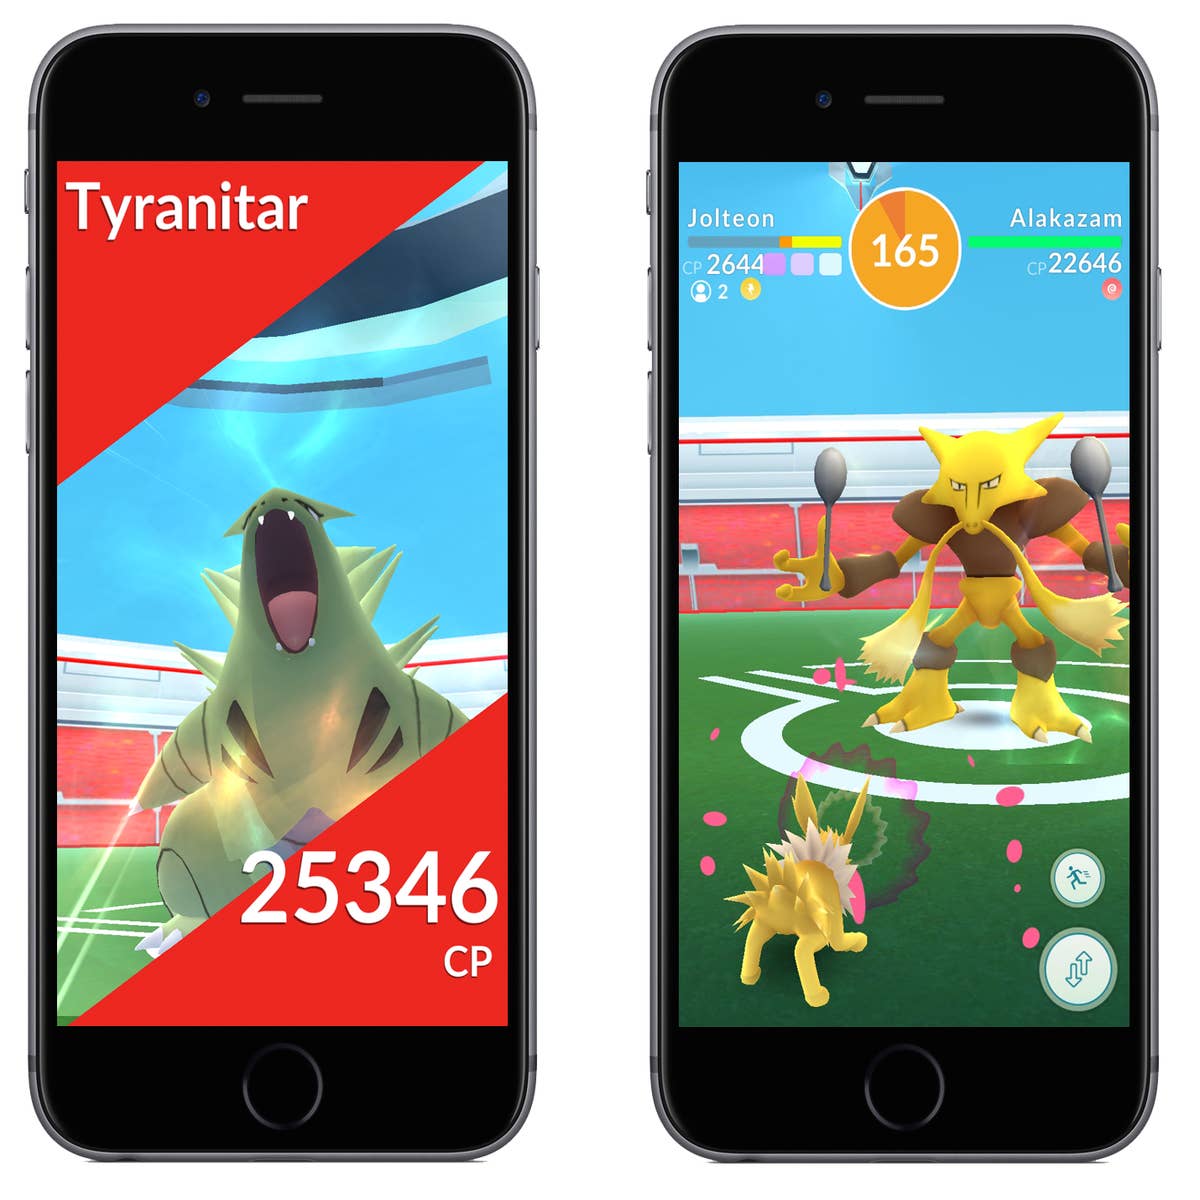 Pokémon Go Raid Hour date and time, plus how Raids work, including